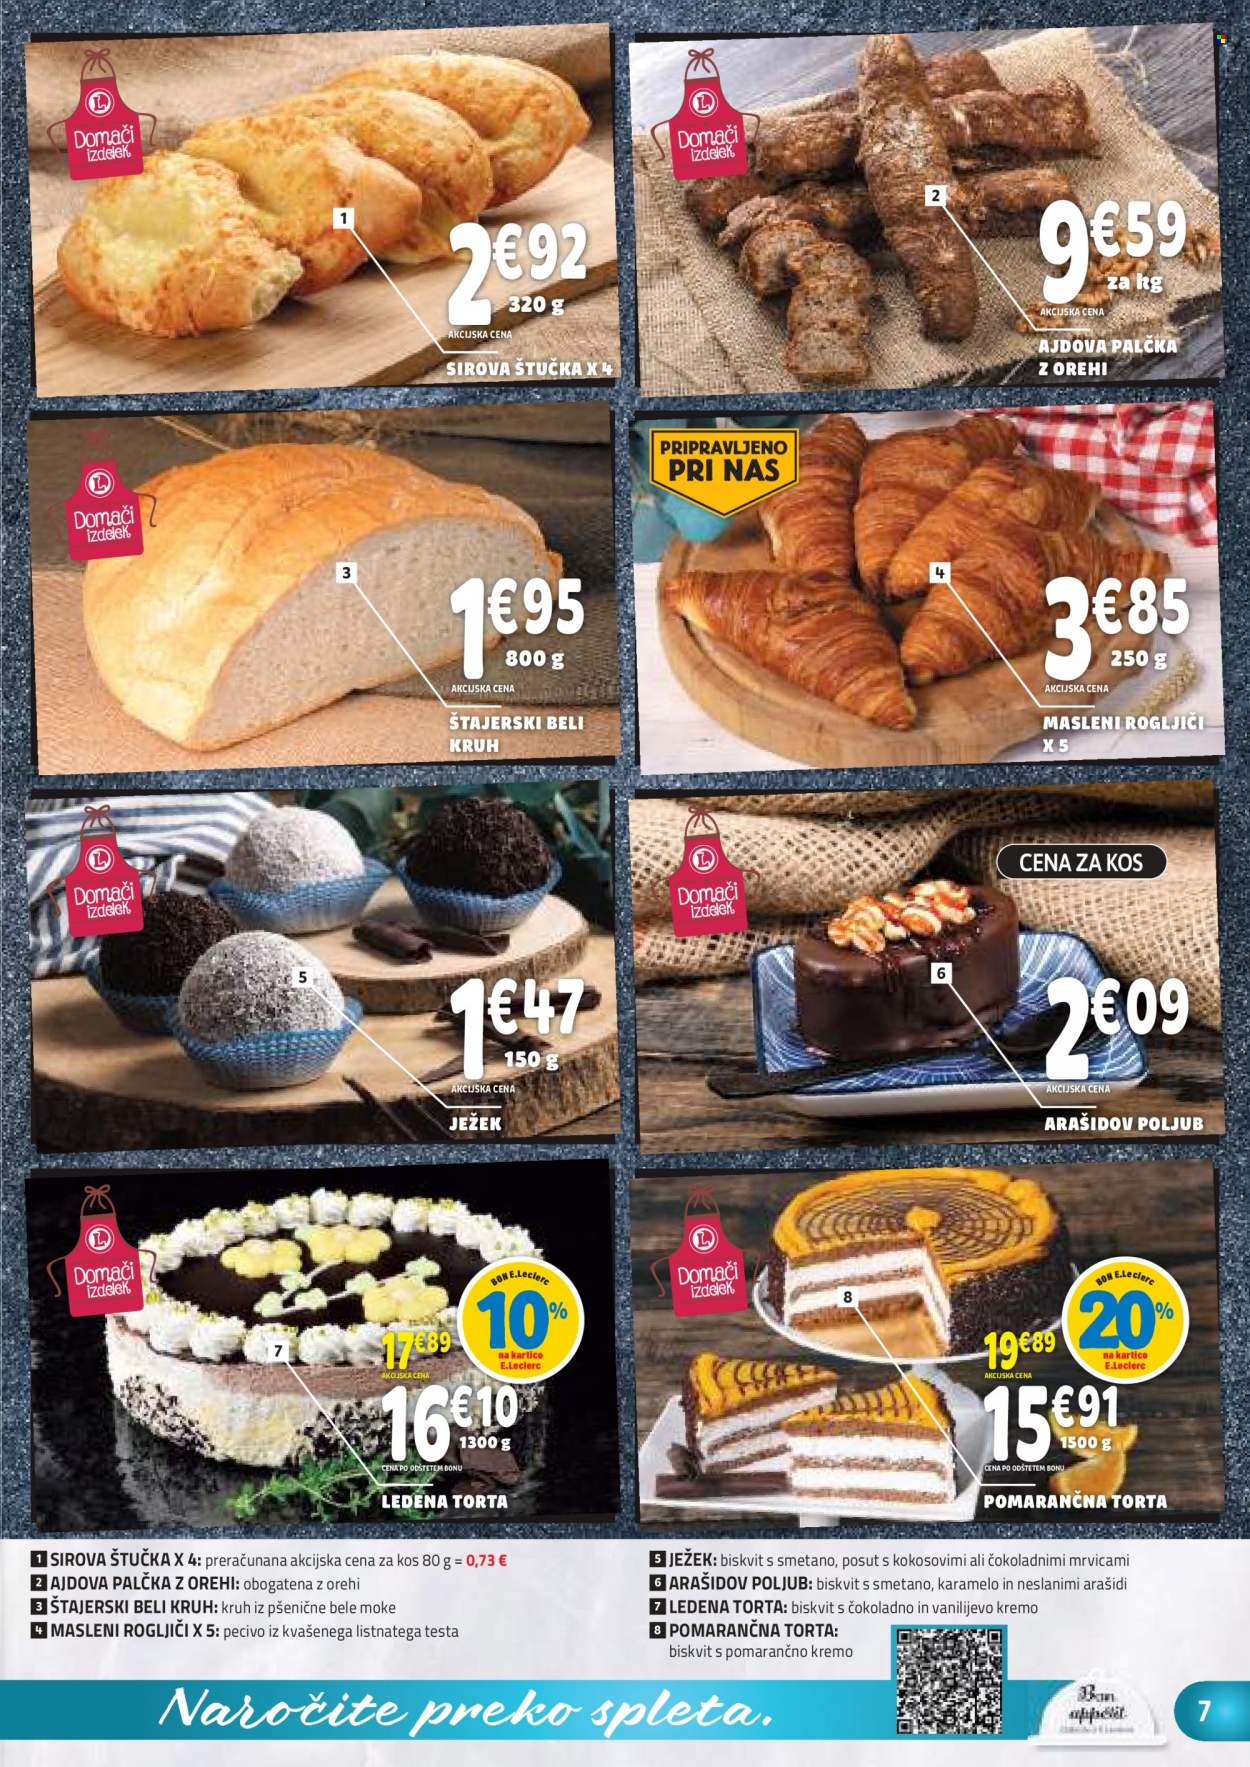 thumbnail - E.Leclerc katalog - 10.8.2022 - 20.8.2022 - Ponudba izdelkov - kruh, pecivo, ledena torta, torta, arašidi, orehi. Stran 7.